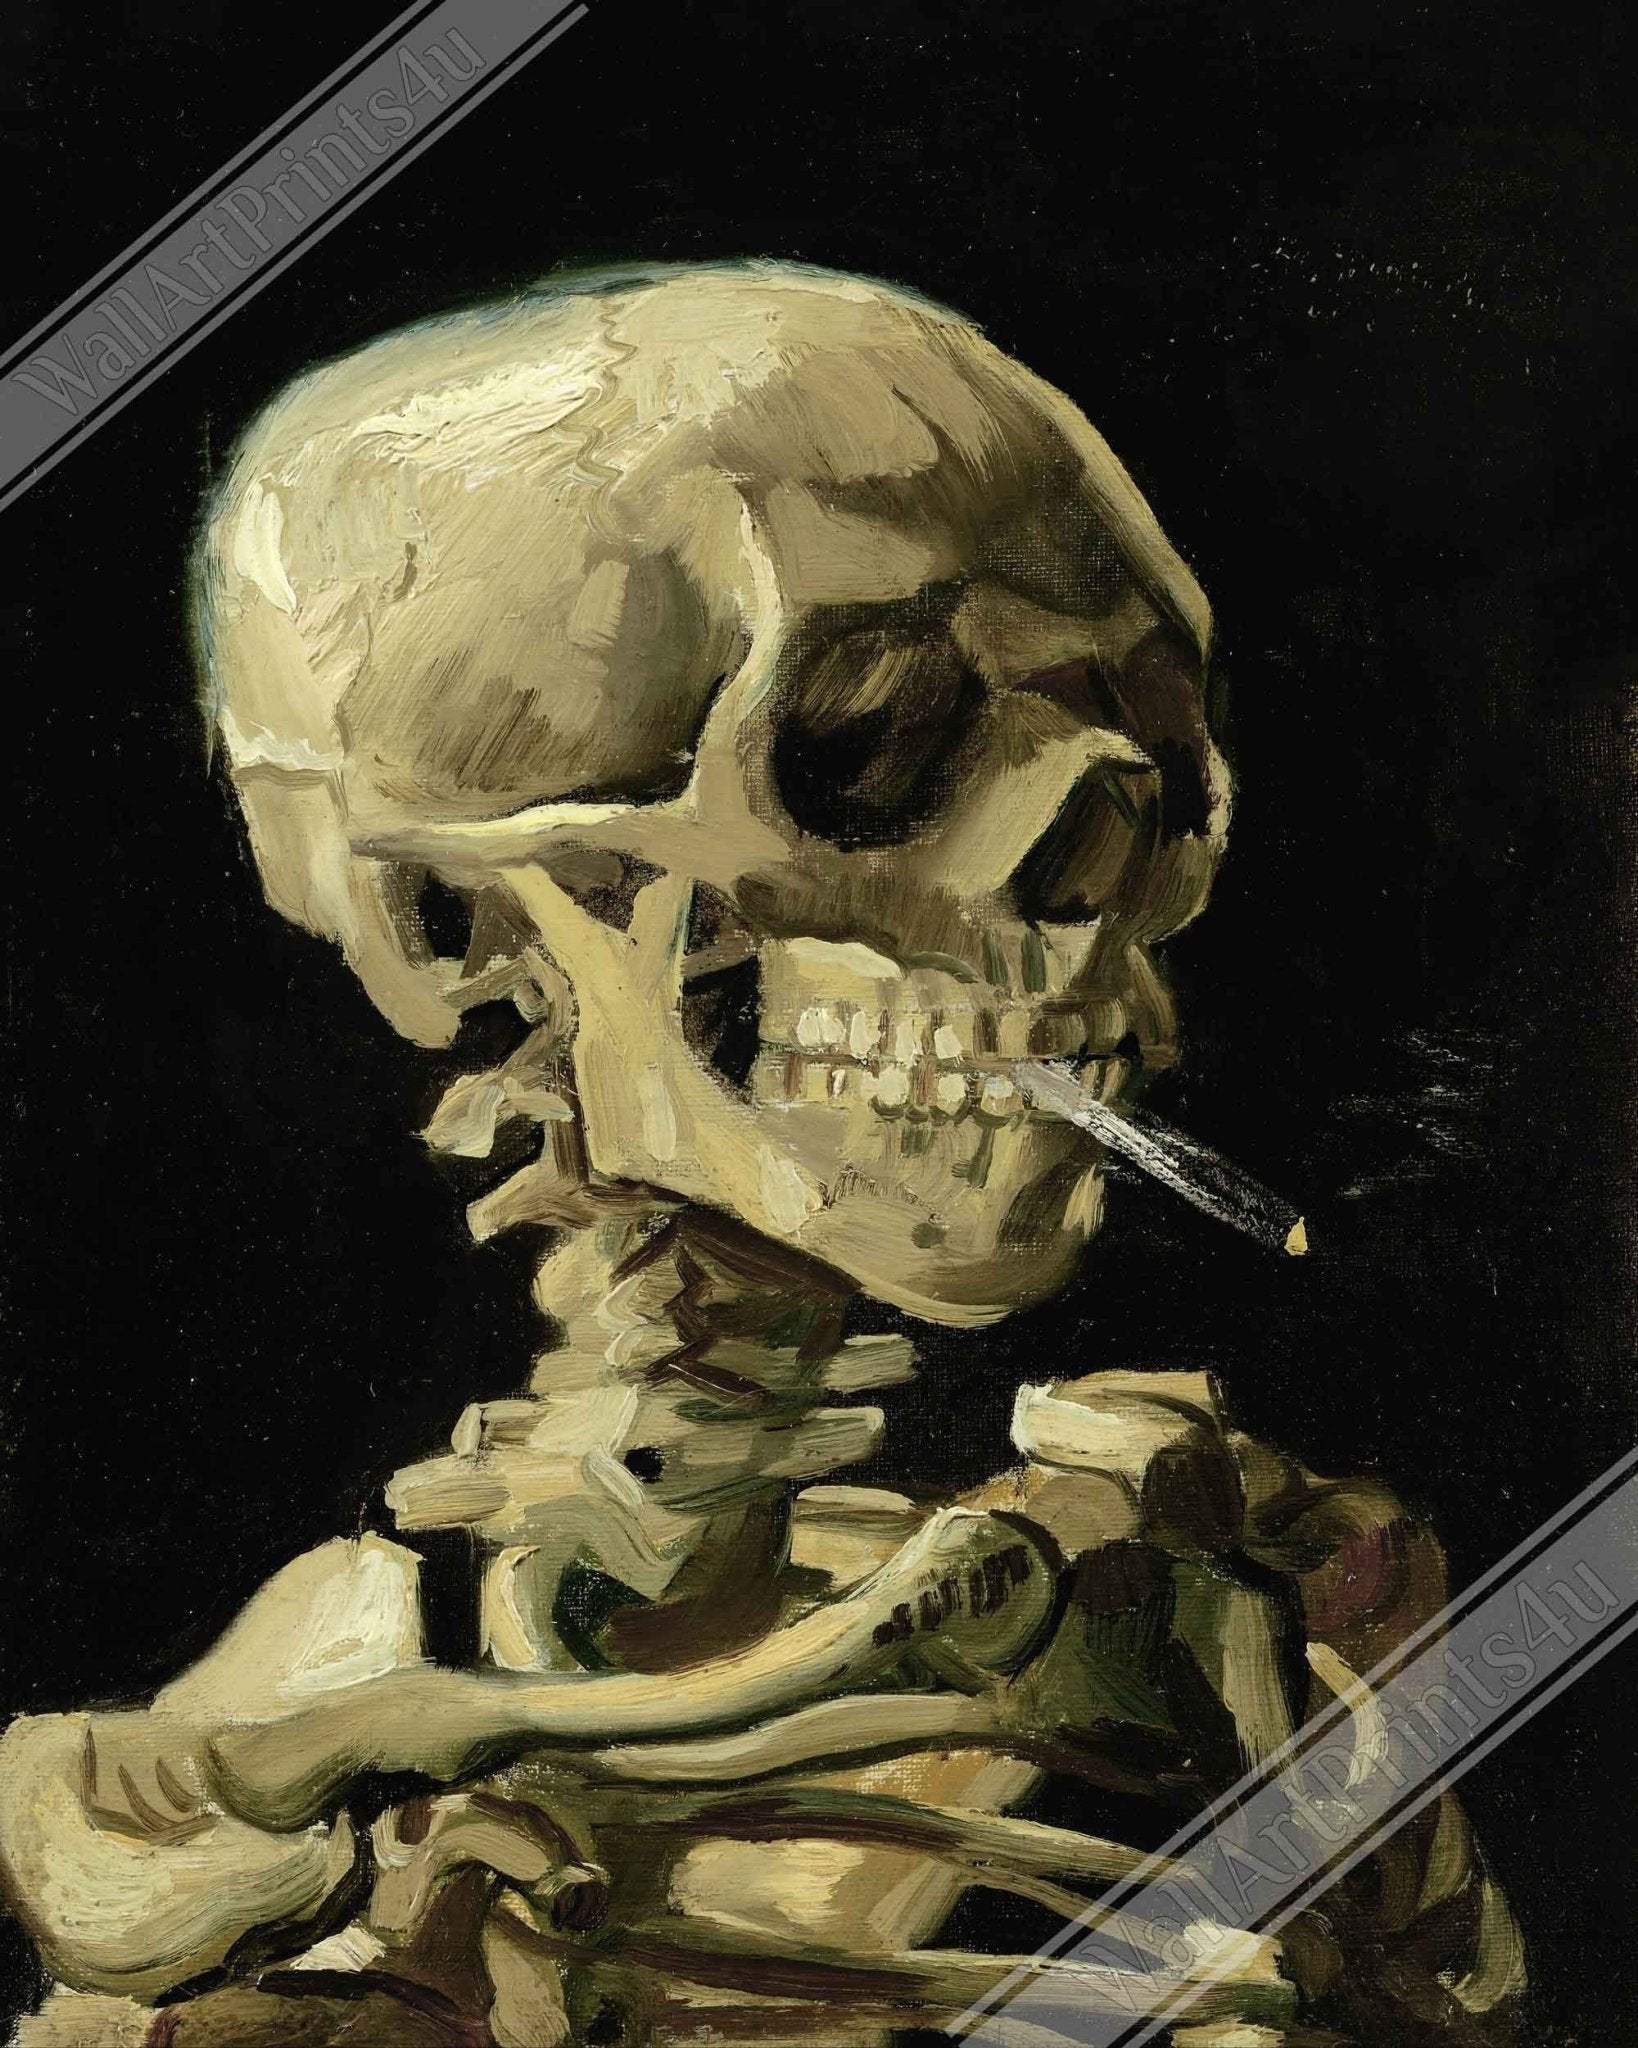 Van Gogh Skeleton With A Cigarette Canvas - Skull With A Burning Cigarette Canvas Print - WallArtPrints4U